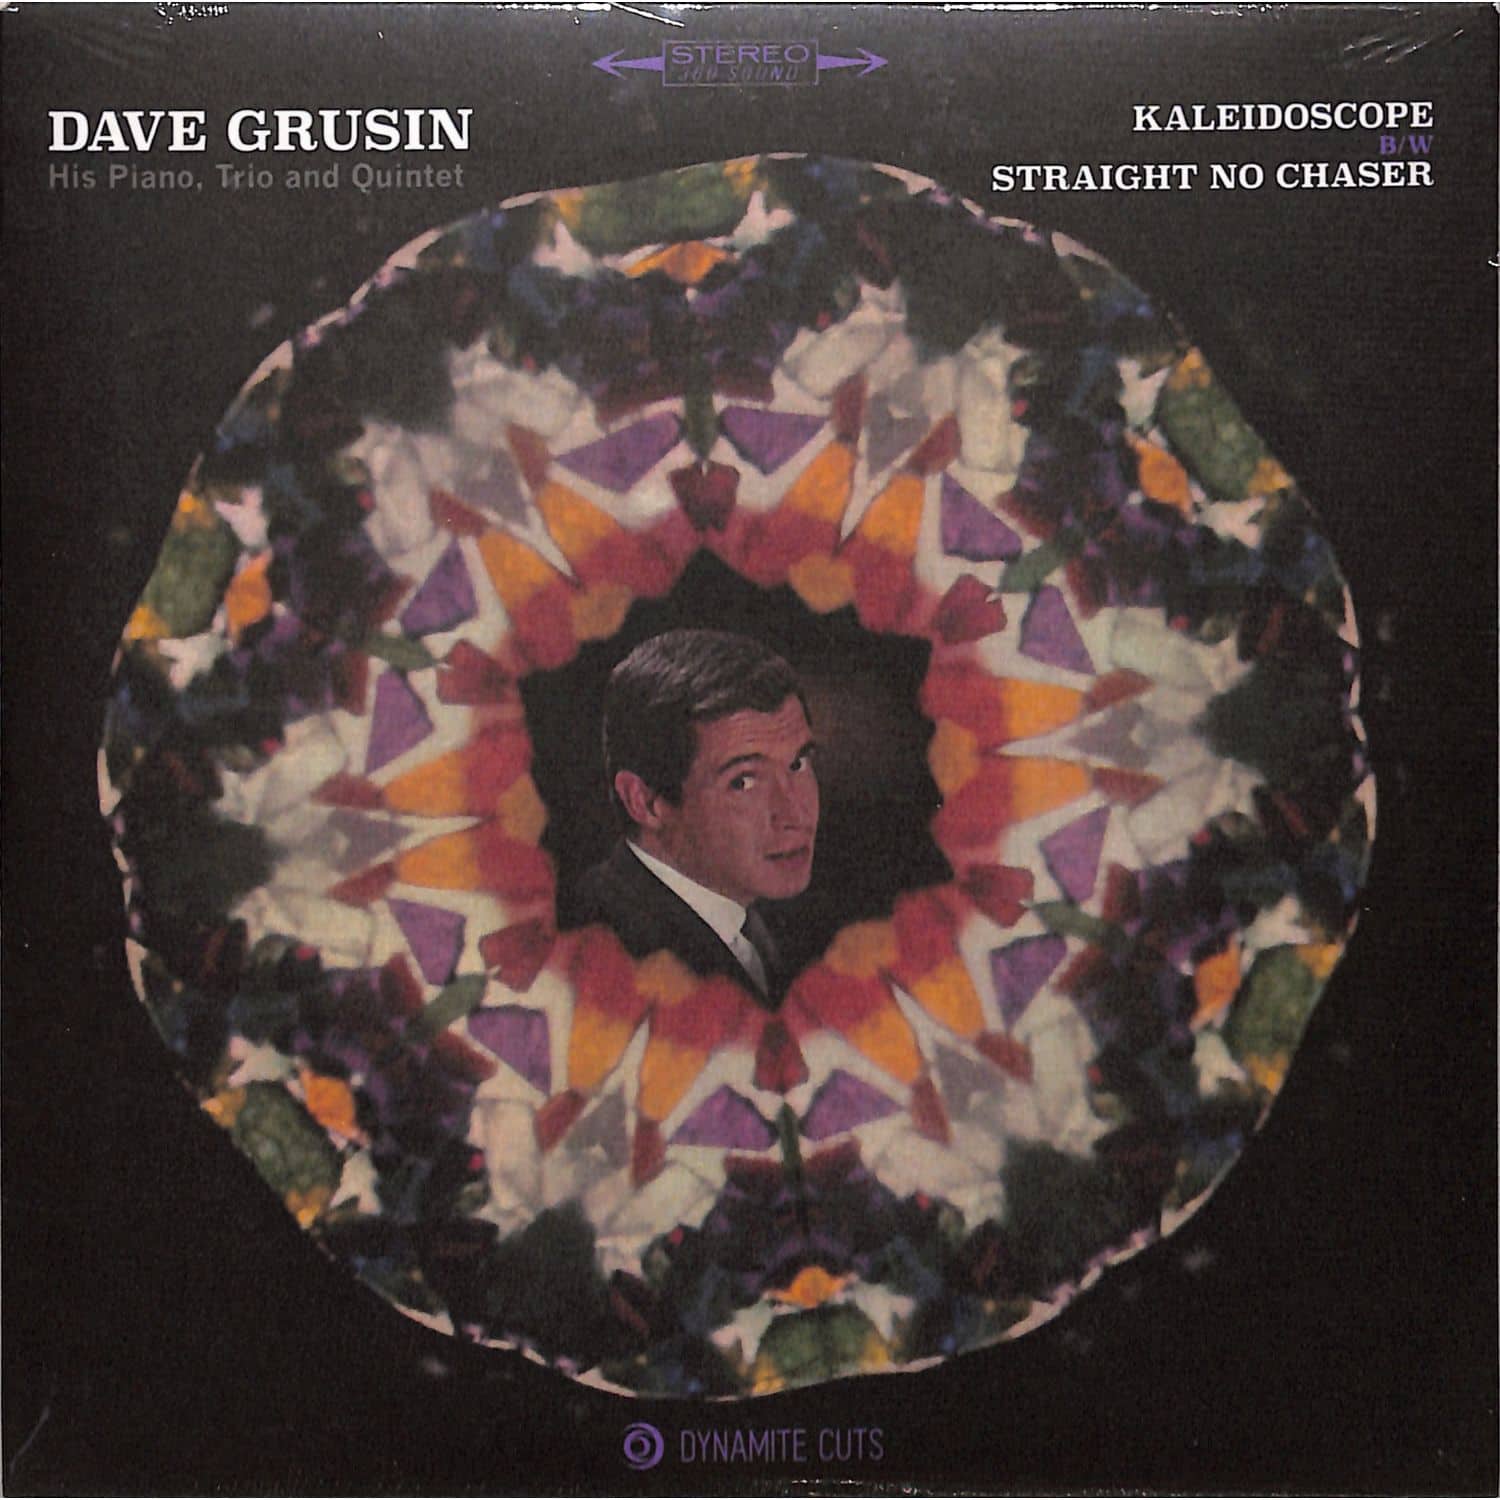 Dave Grusin - KALEIDOSCOPE / STRAIGH NO CHASER 